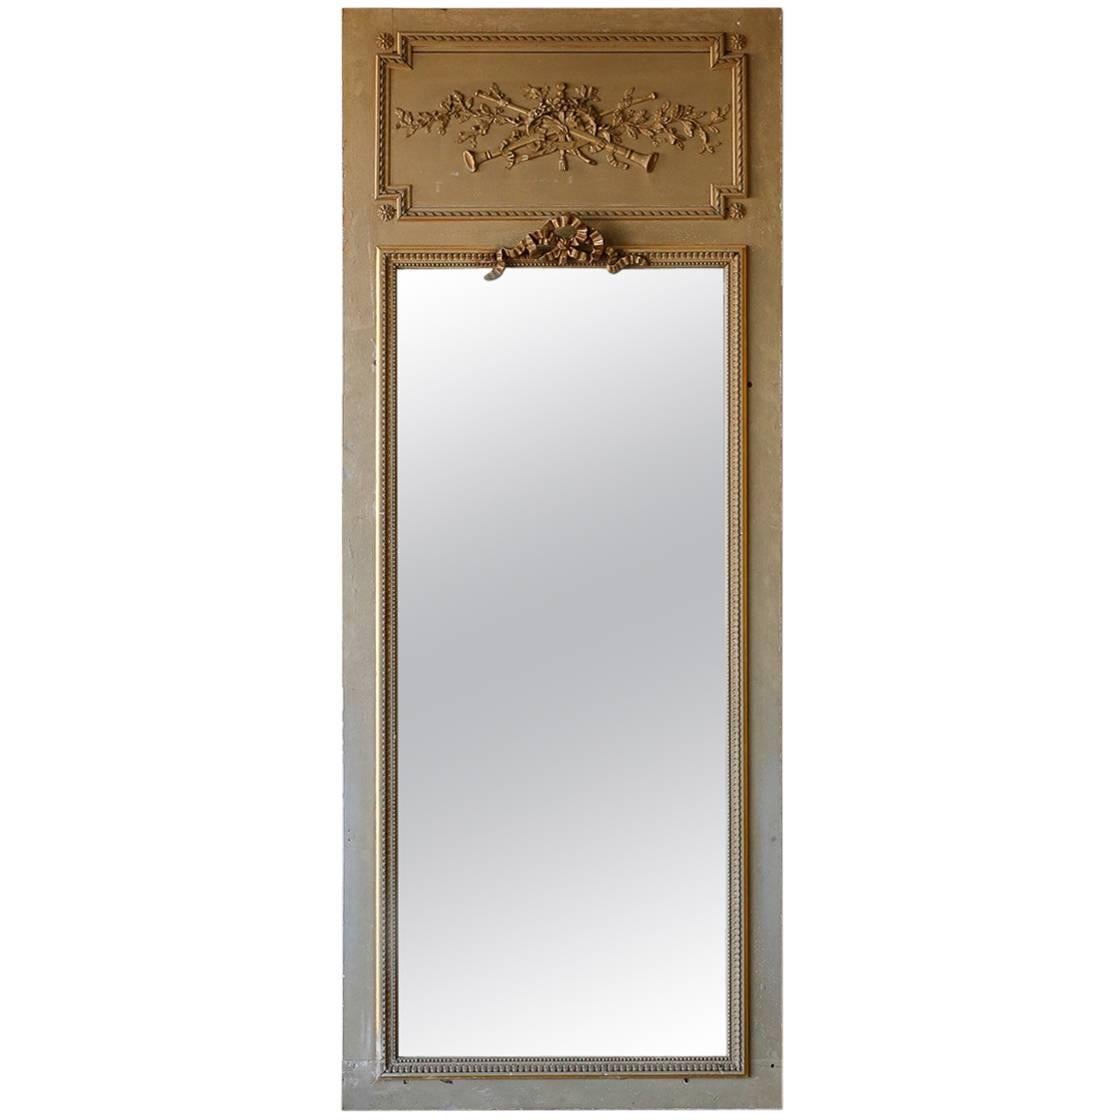 Boiserie Trumeau Mirror